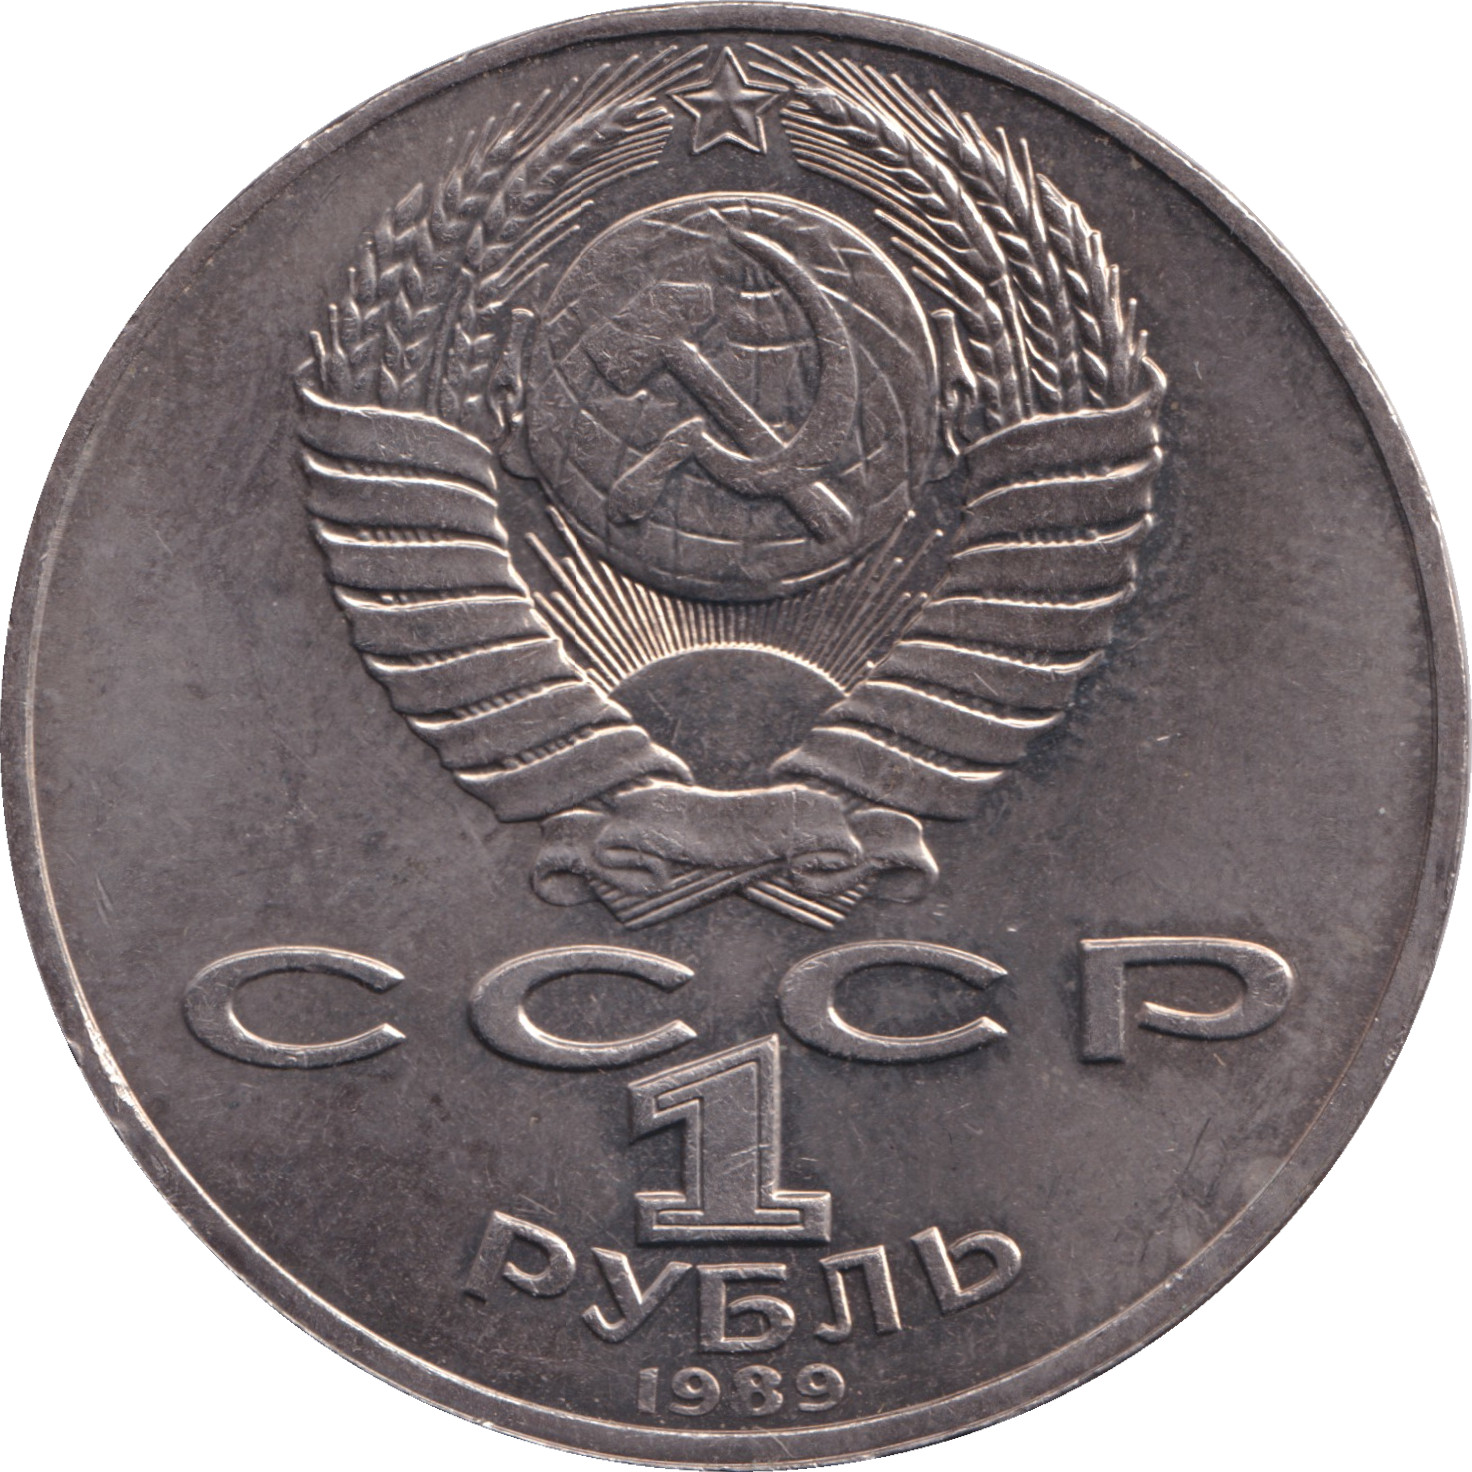 1 ruble - Lermontov